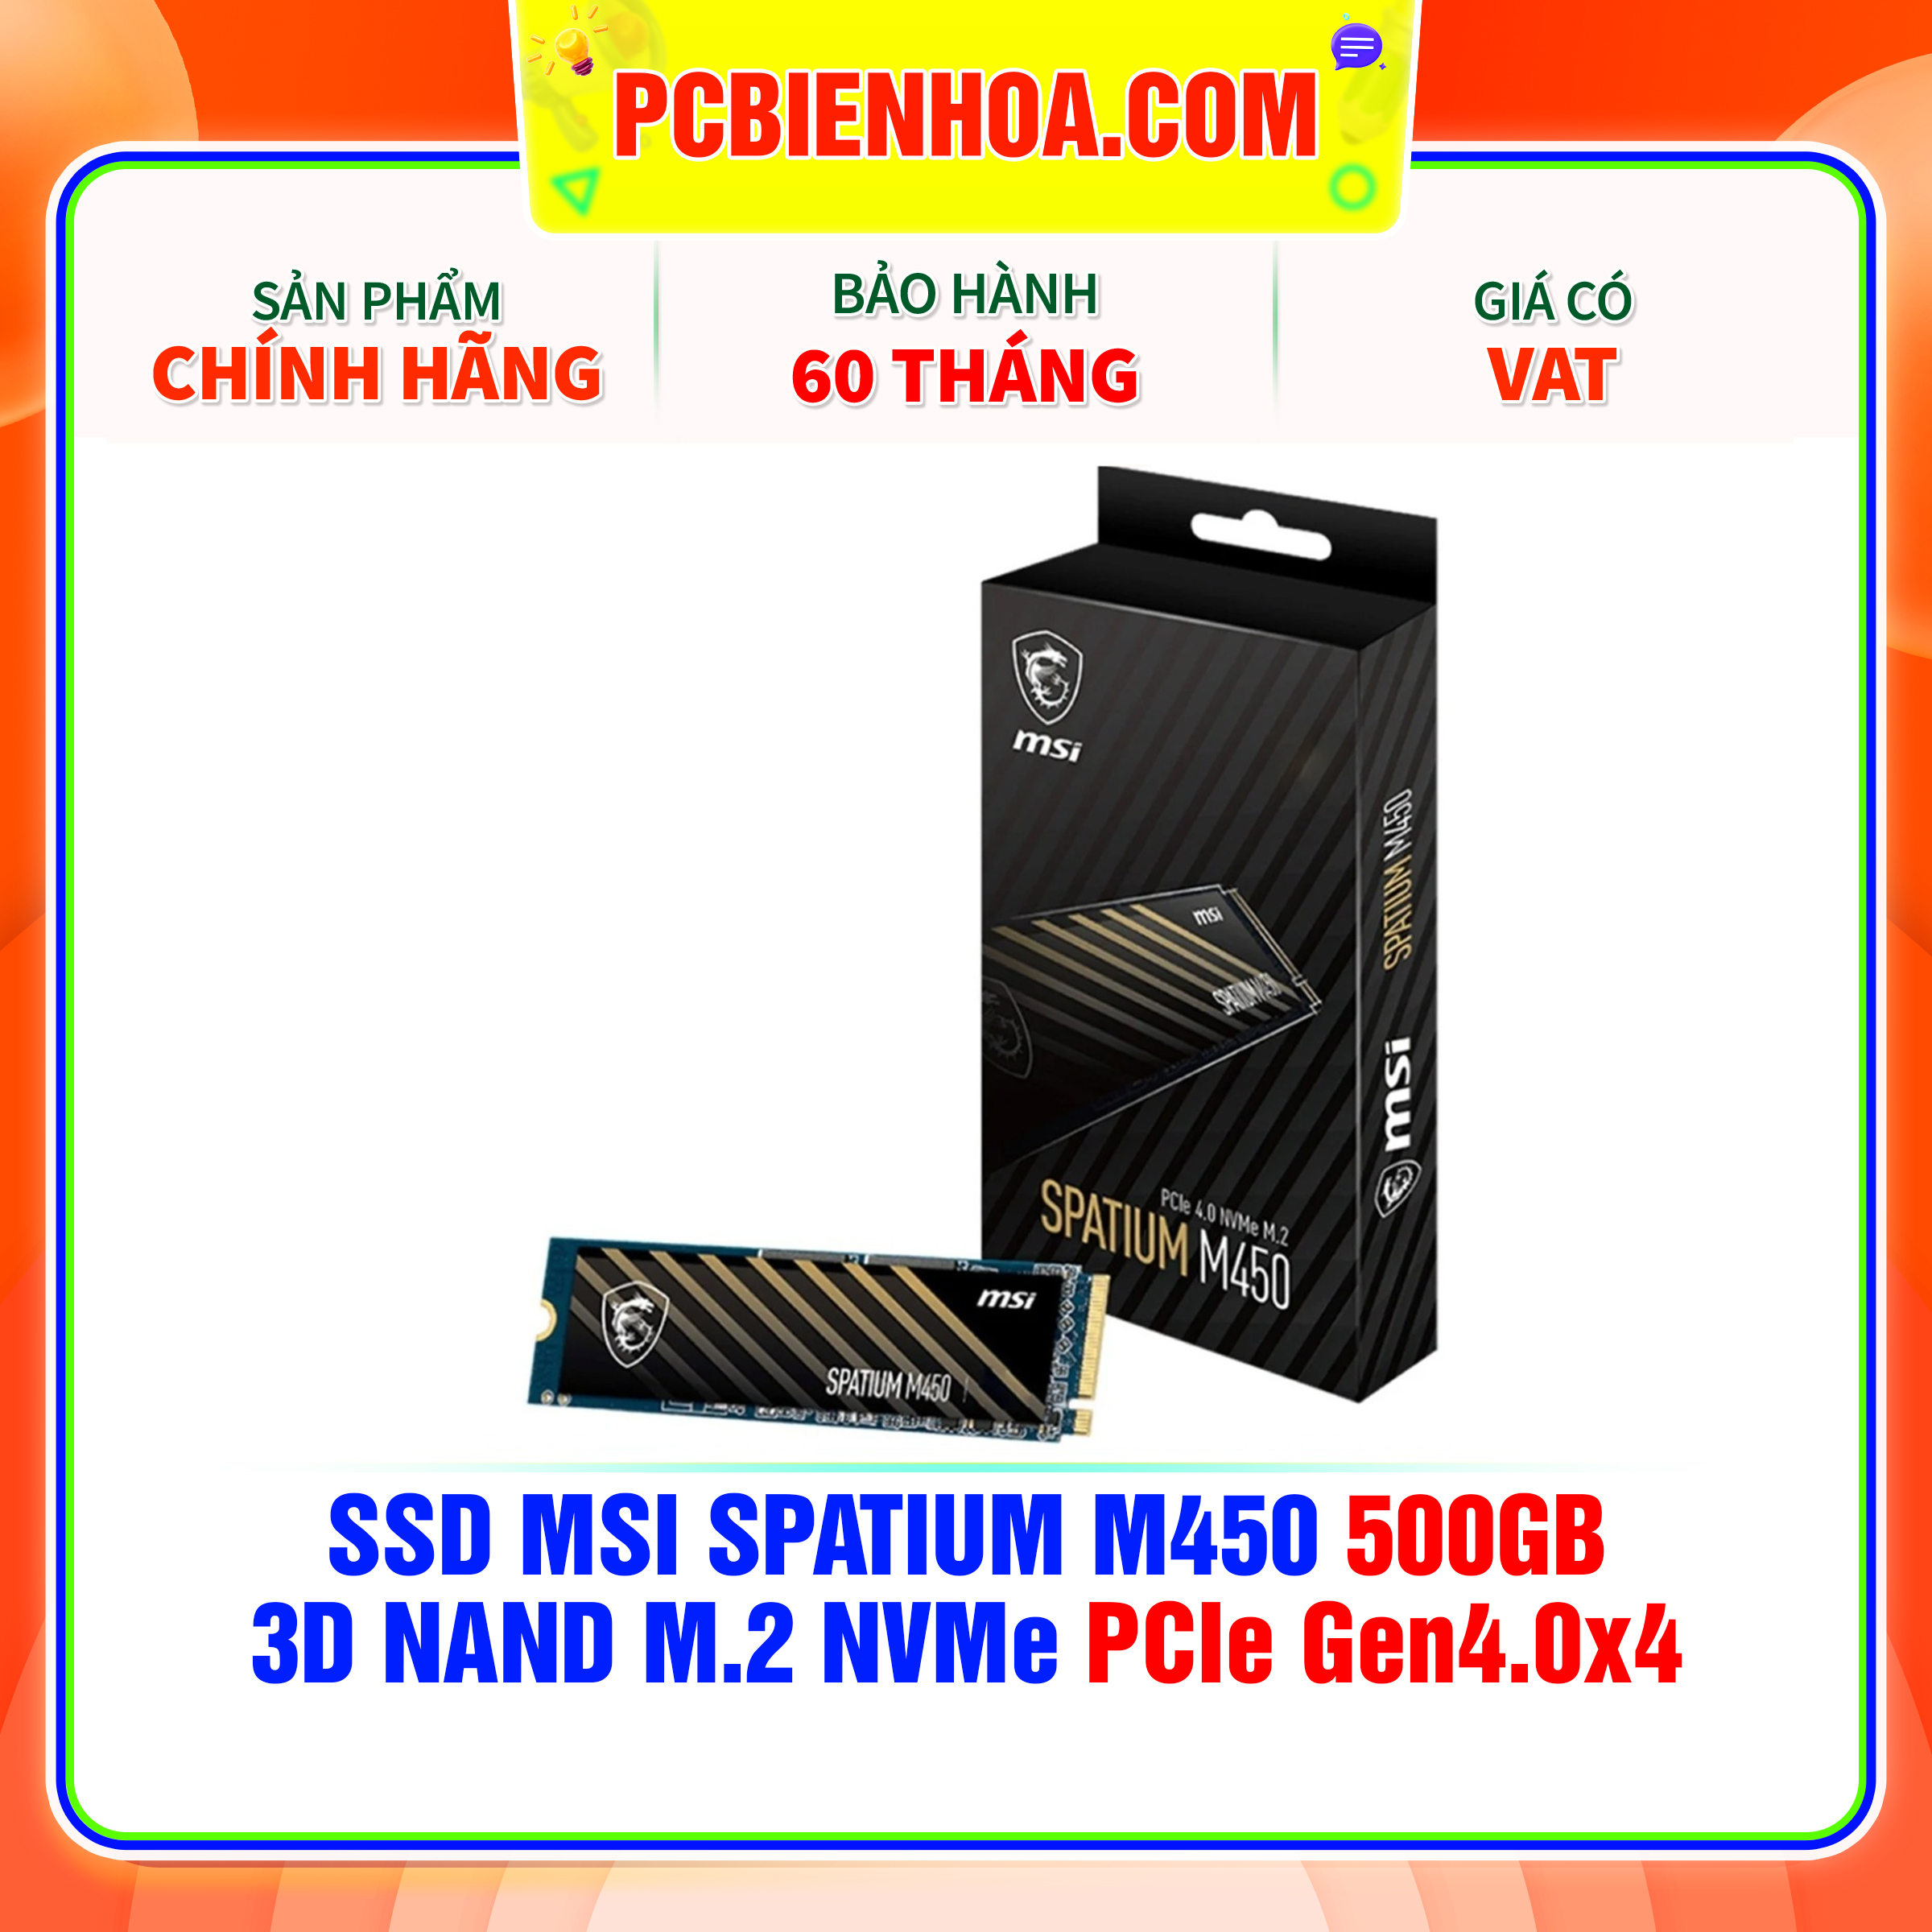 SSD MSI SPATIUM M450 500GB - 3D NAND M.2 NVMe PCIe Gen4.0x4